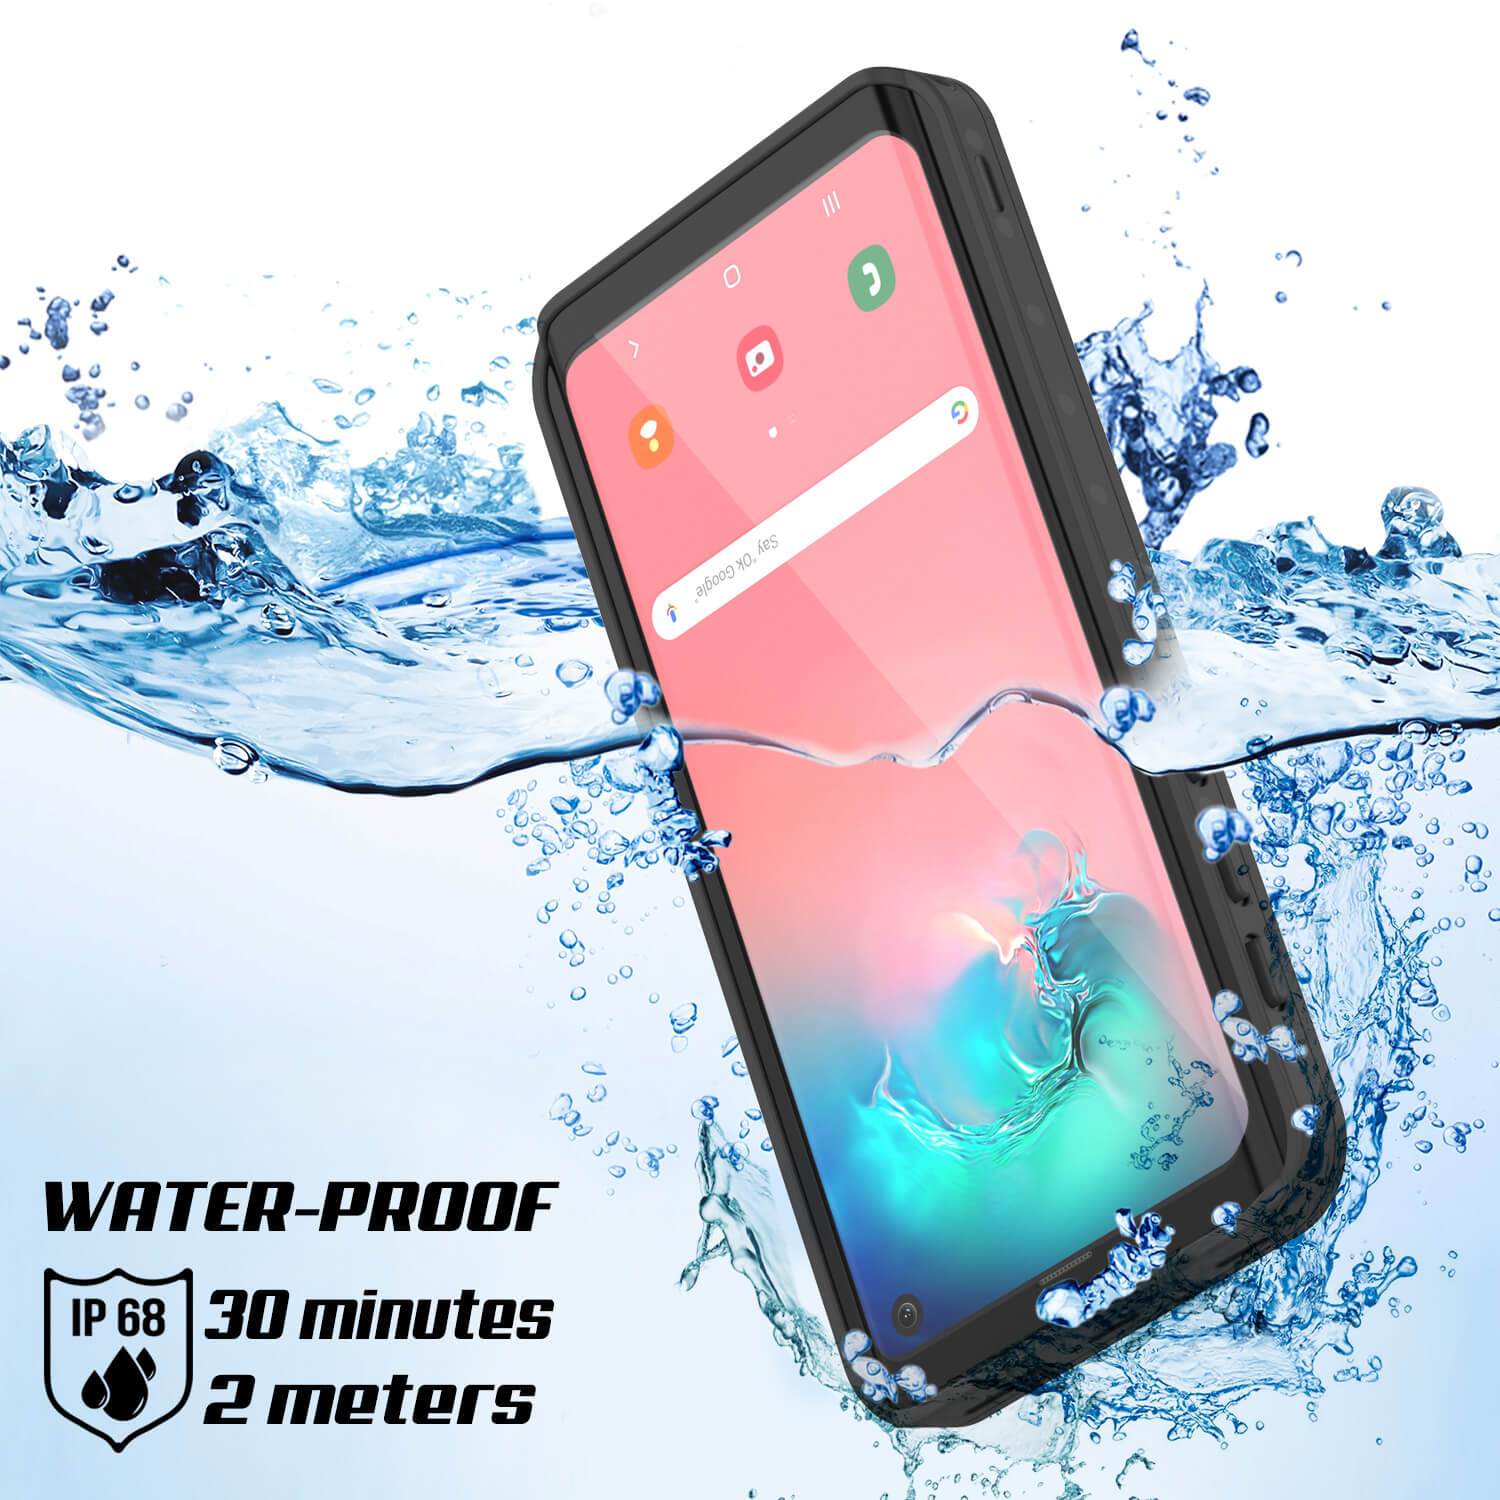 Galaxy S10 Waterproof Case PunkCase StudStar Black Thin 6.6ft Underwater IP68 Shock/Snow Proof